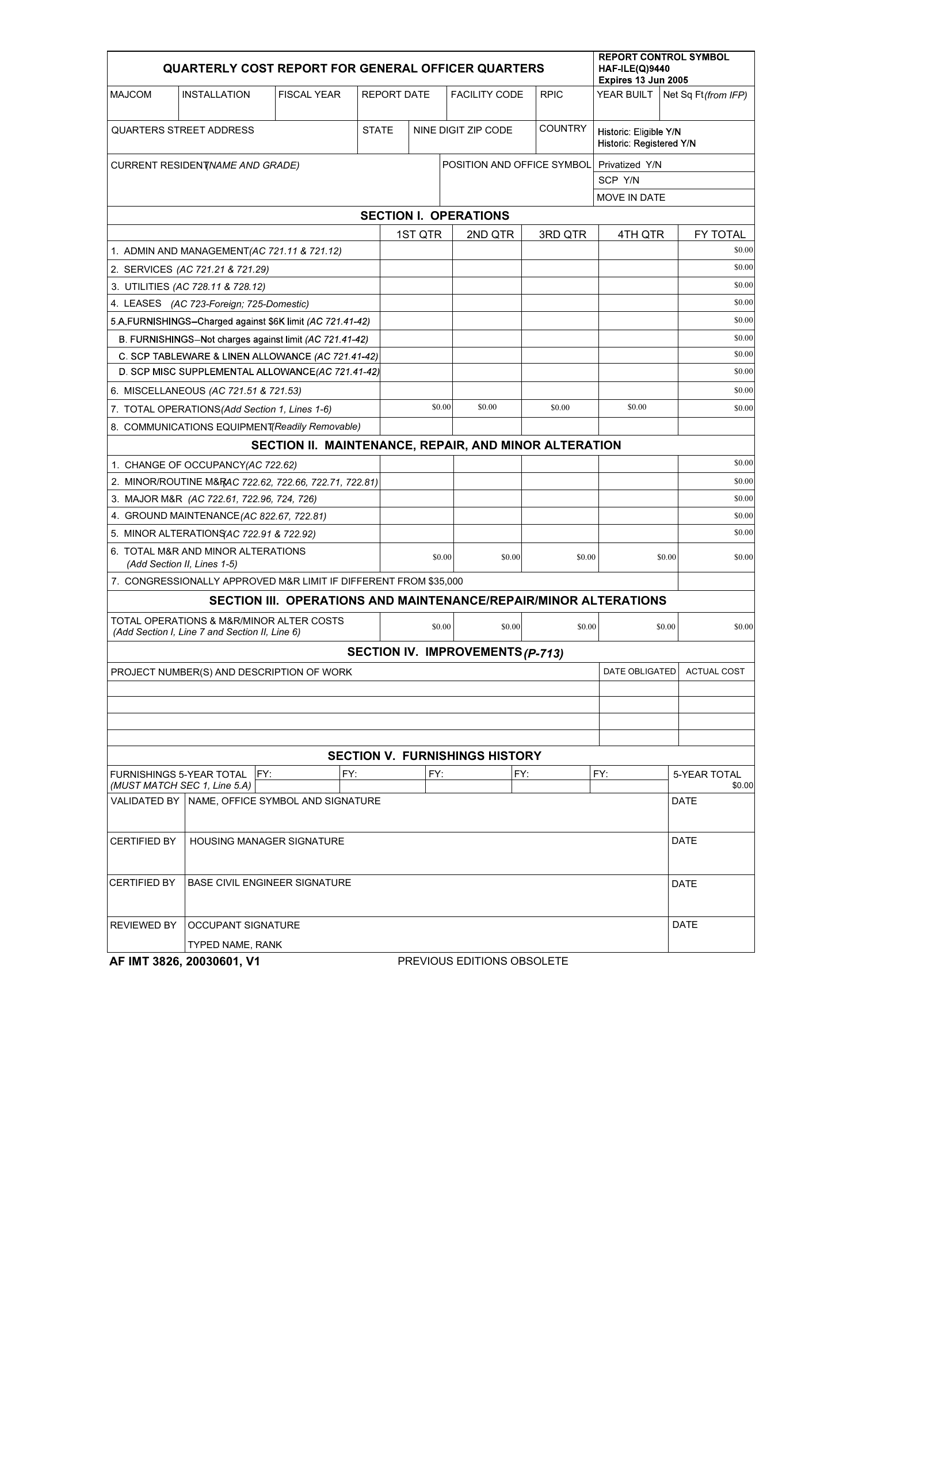 AF IMT Form 3826 Quarterly Cost Report for General Officer Quarters, Page 1